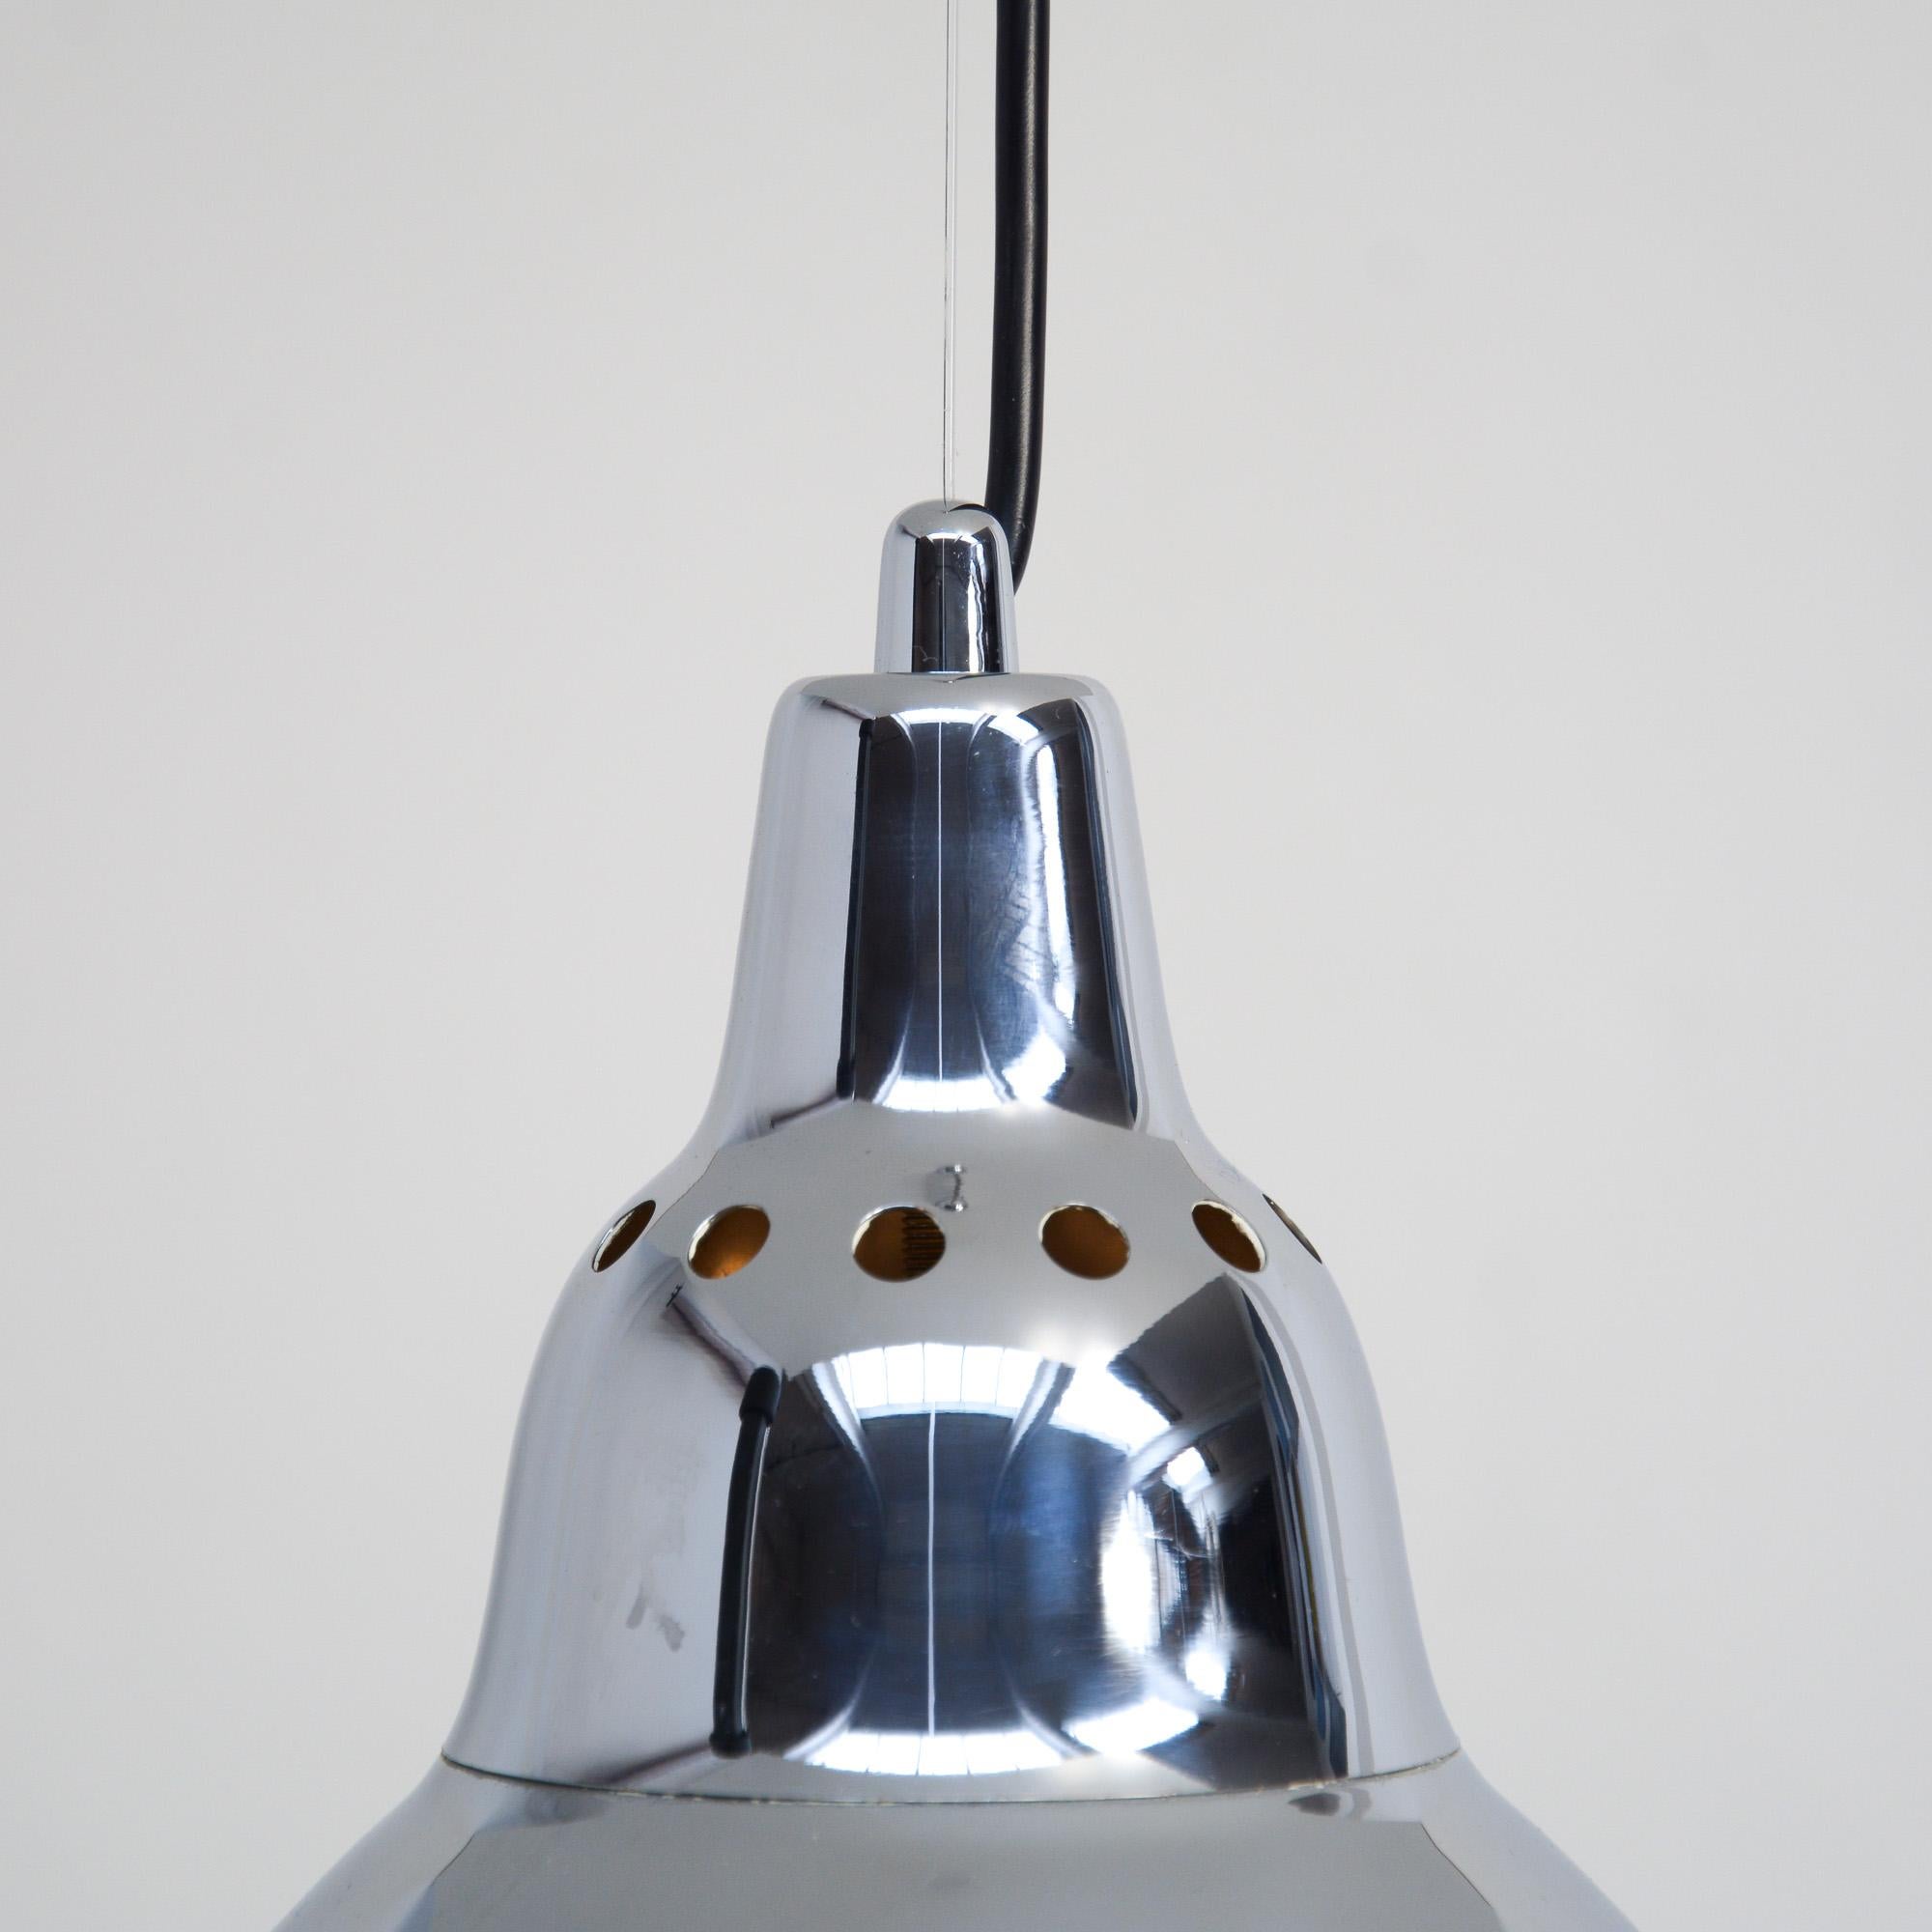 Pair of Headlight Pendant Lamps by Ingo Maurer for Design M 4